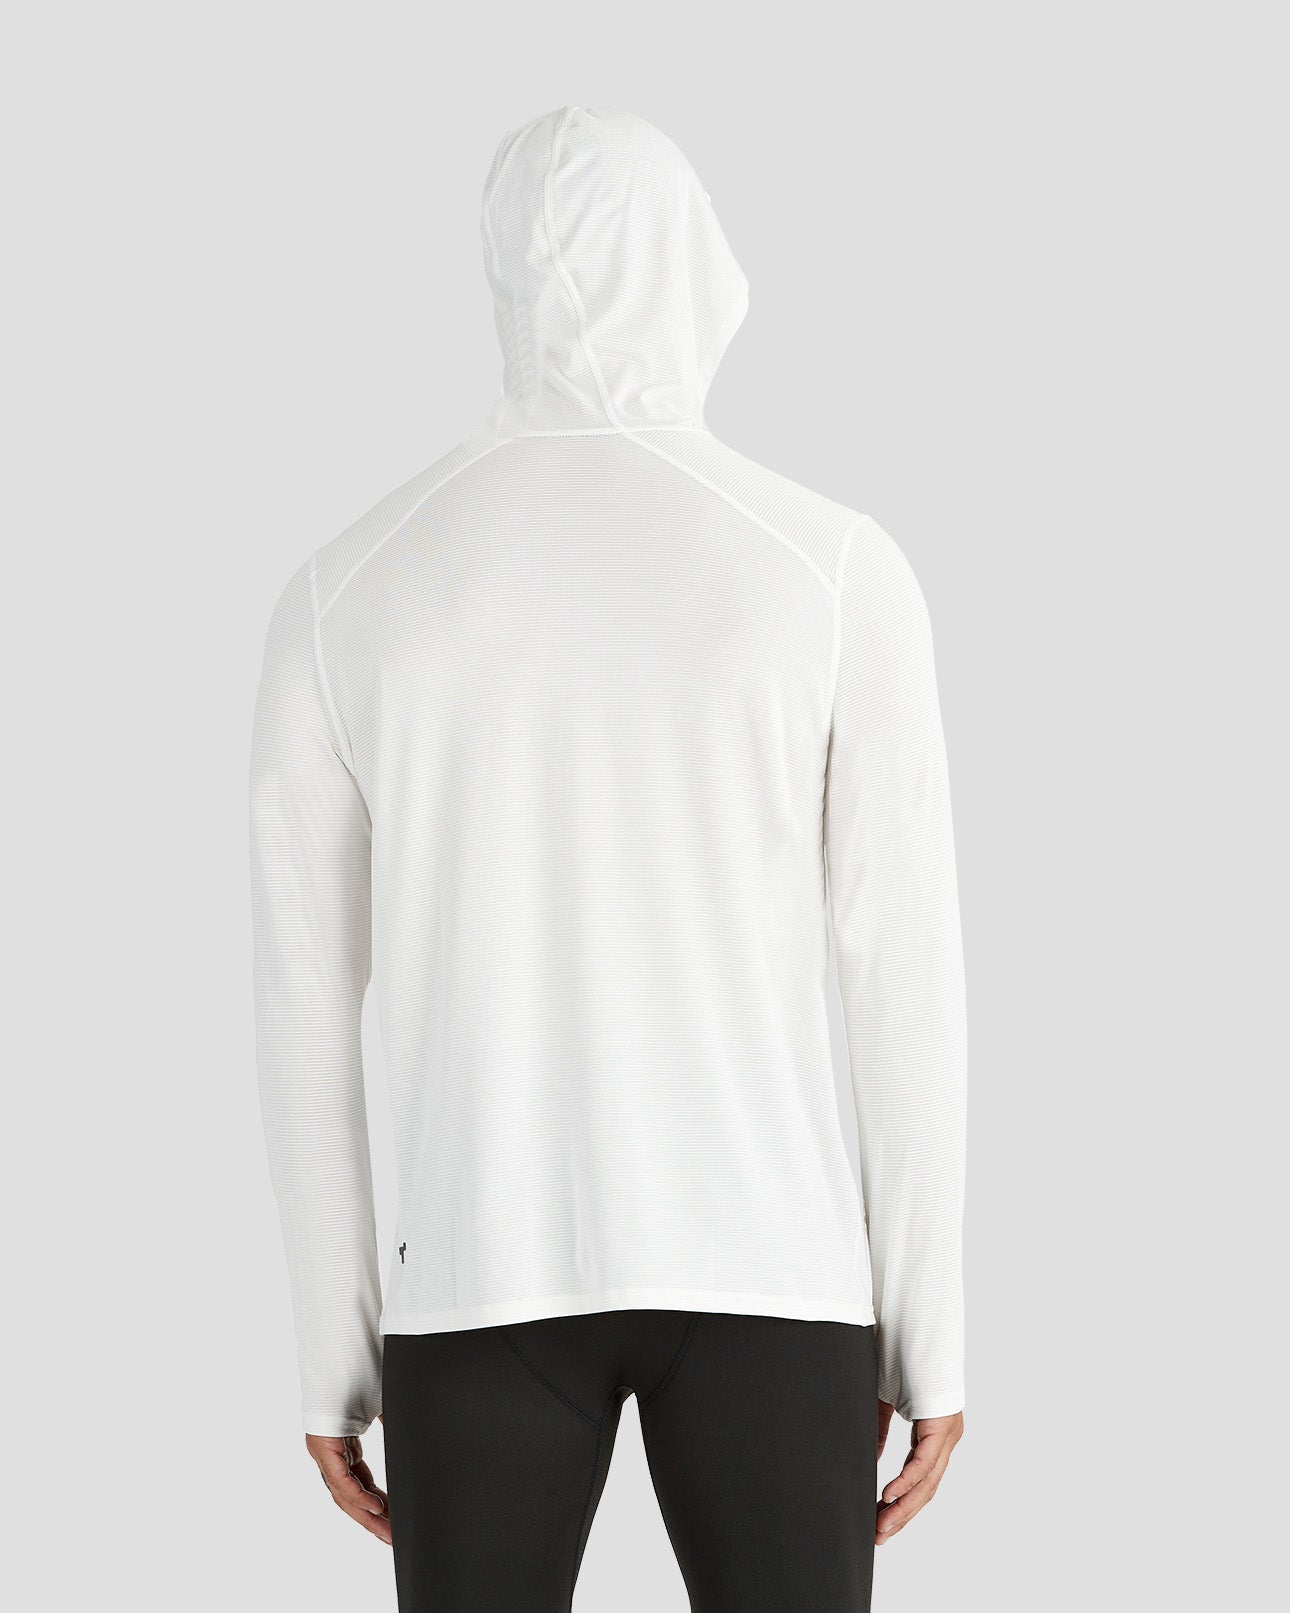 Men's Ventilator Long Sleeve Performance Hoodie | Color: White